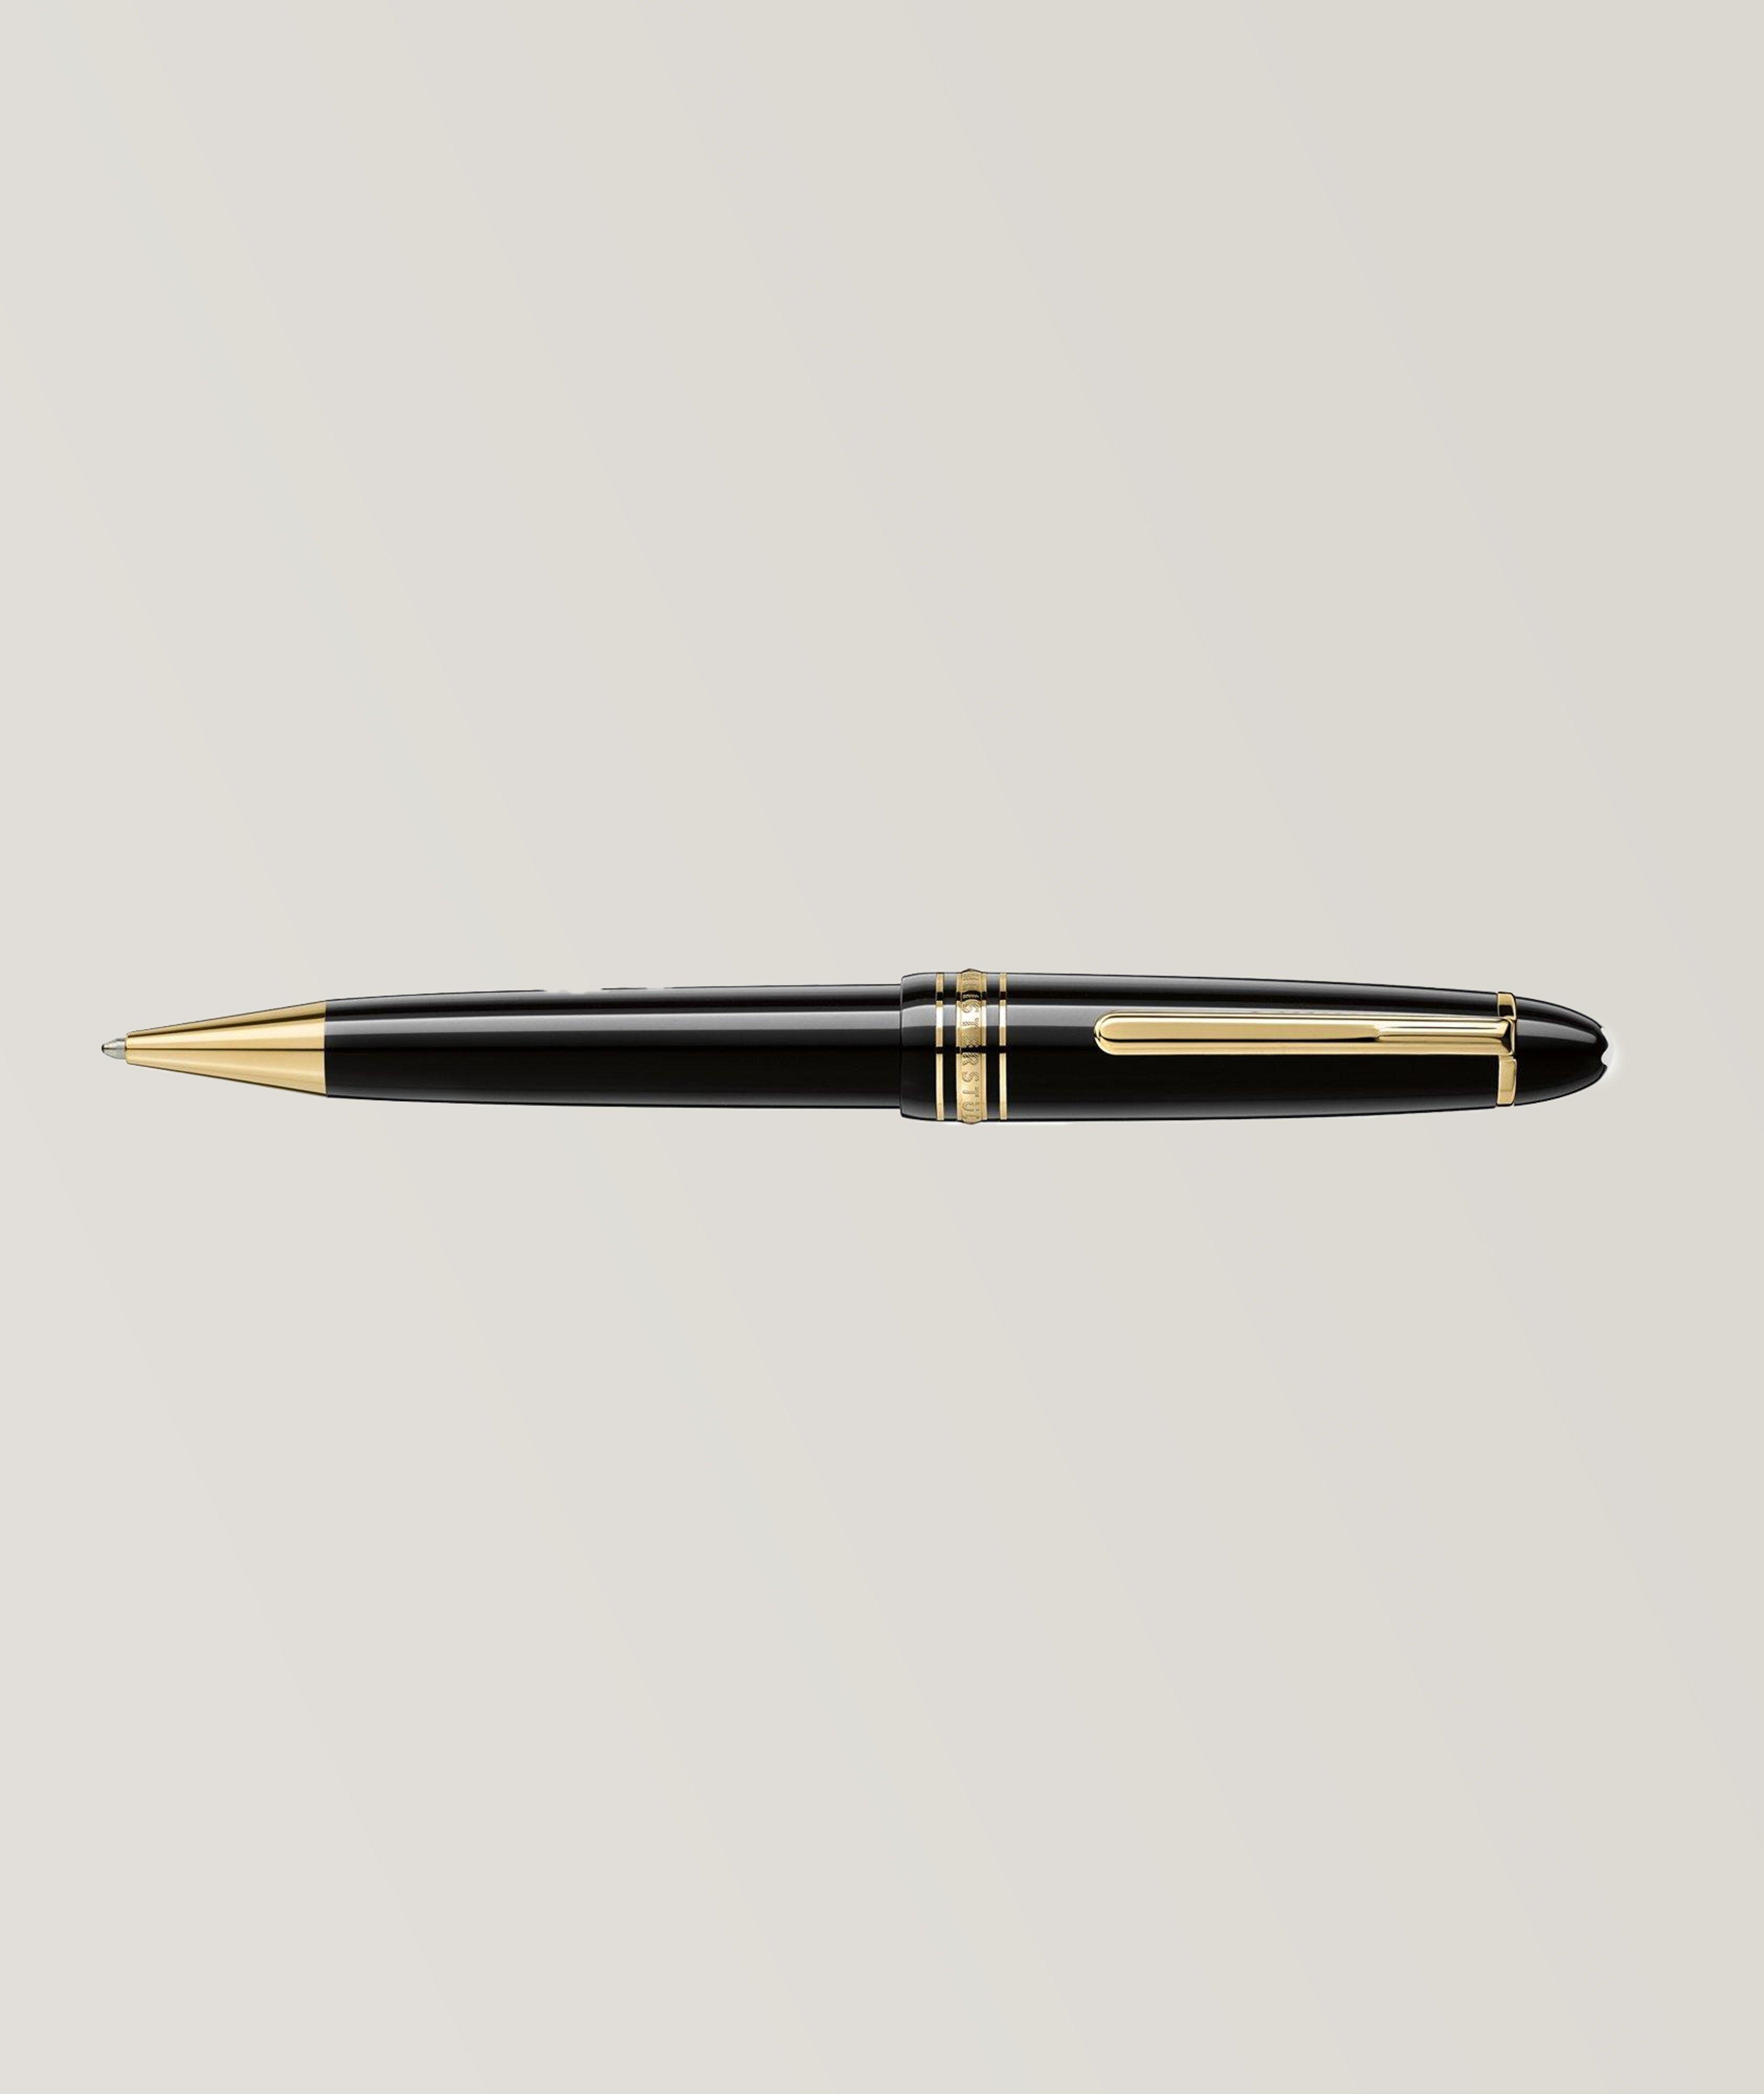  Meisterstück Gold-Coated LeGrand Ballpoint Pen image 1